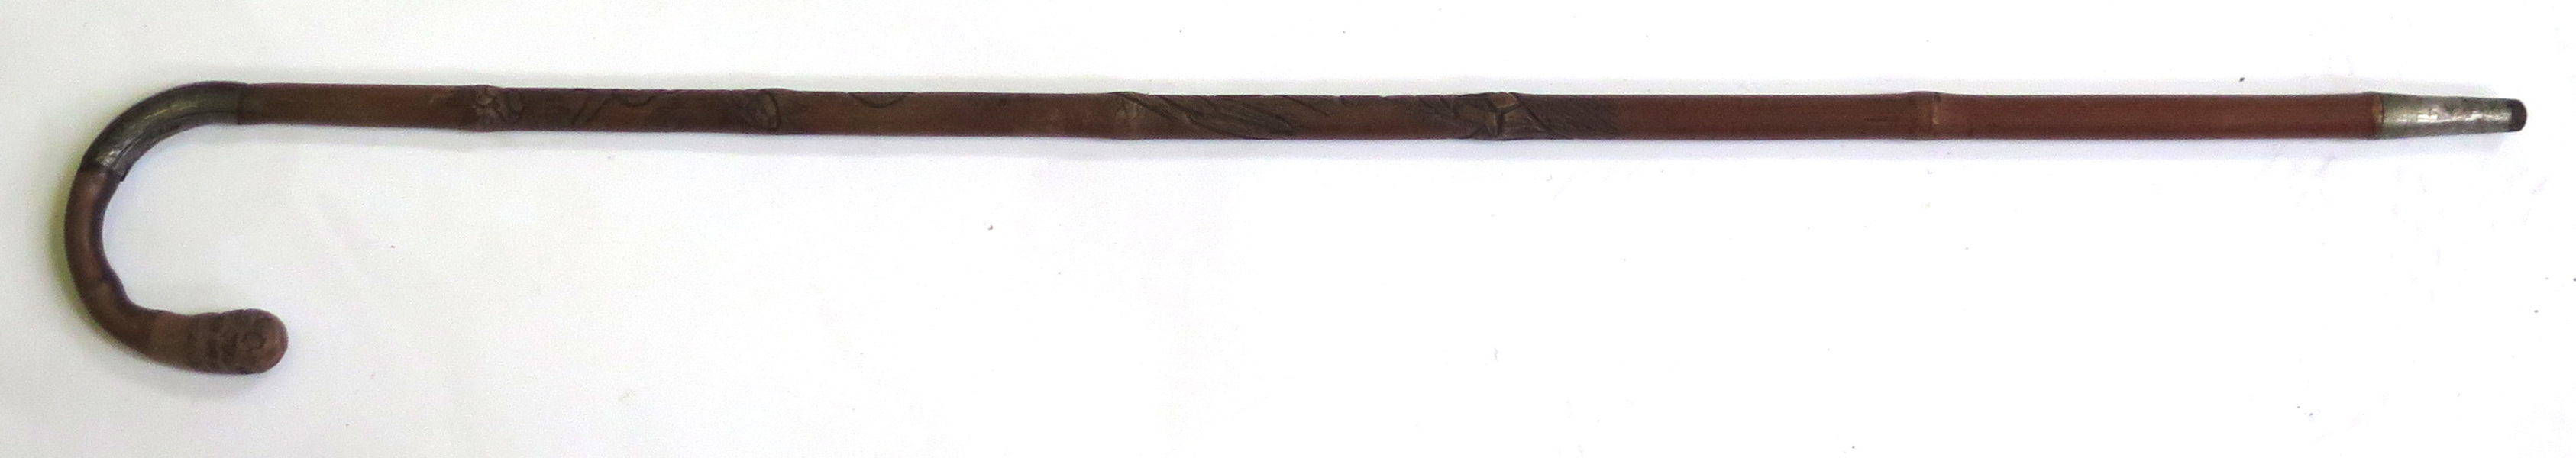 Käpp, bambu med silver(?)montage, antagligen Kina, sekelskiftet 1900,_11378a_8d94b5ac0be07bf_lg.jpeg